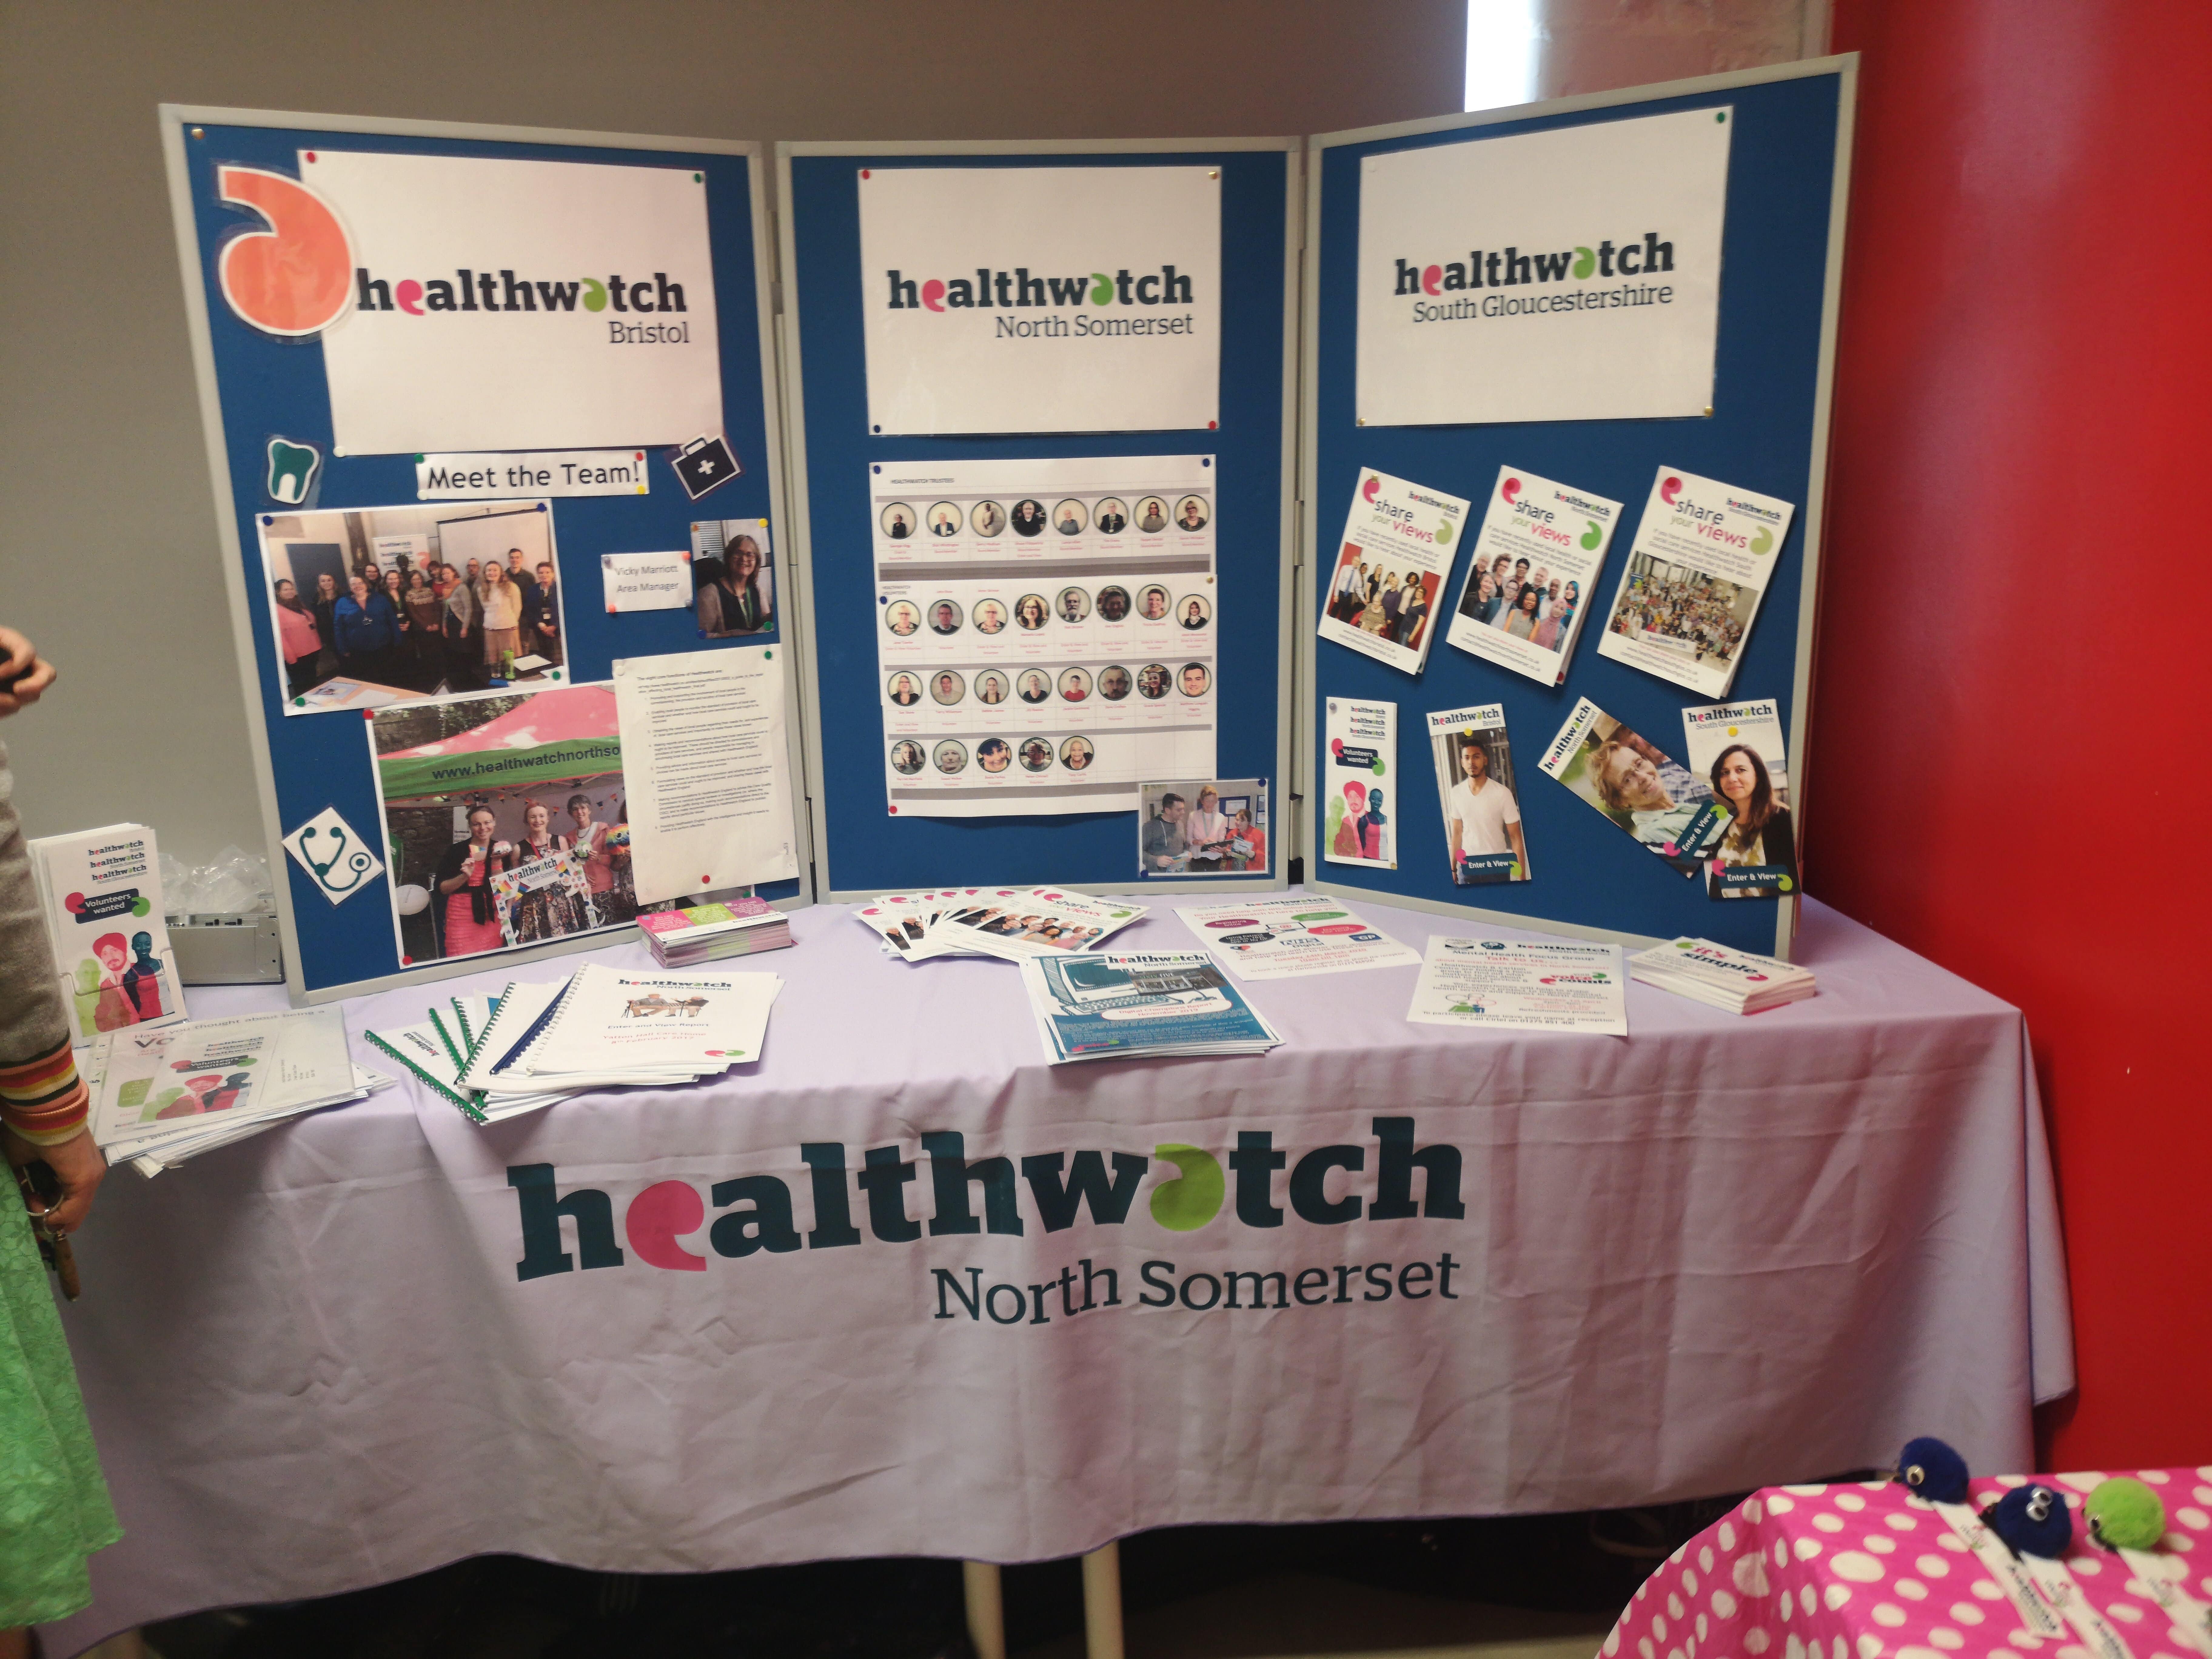 Healthwatch North Somerset display board